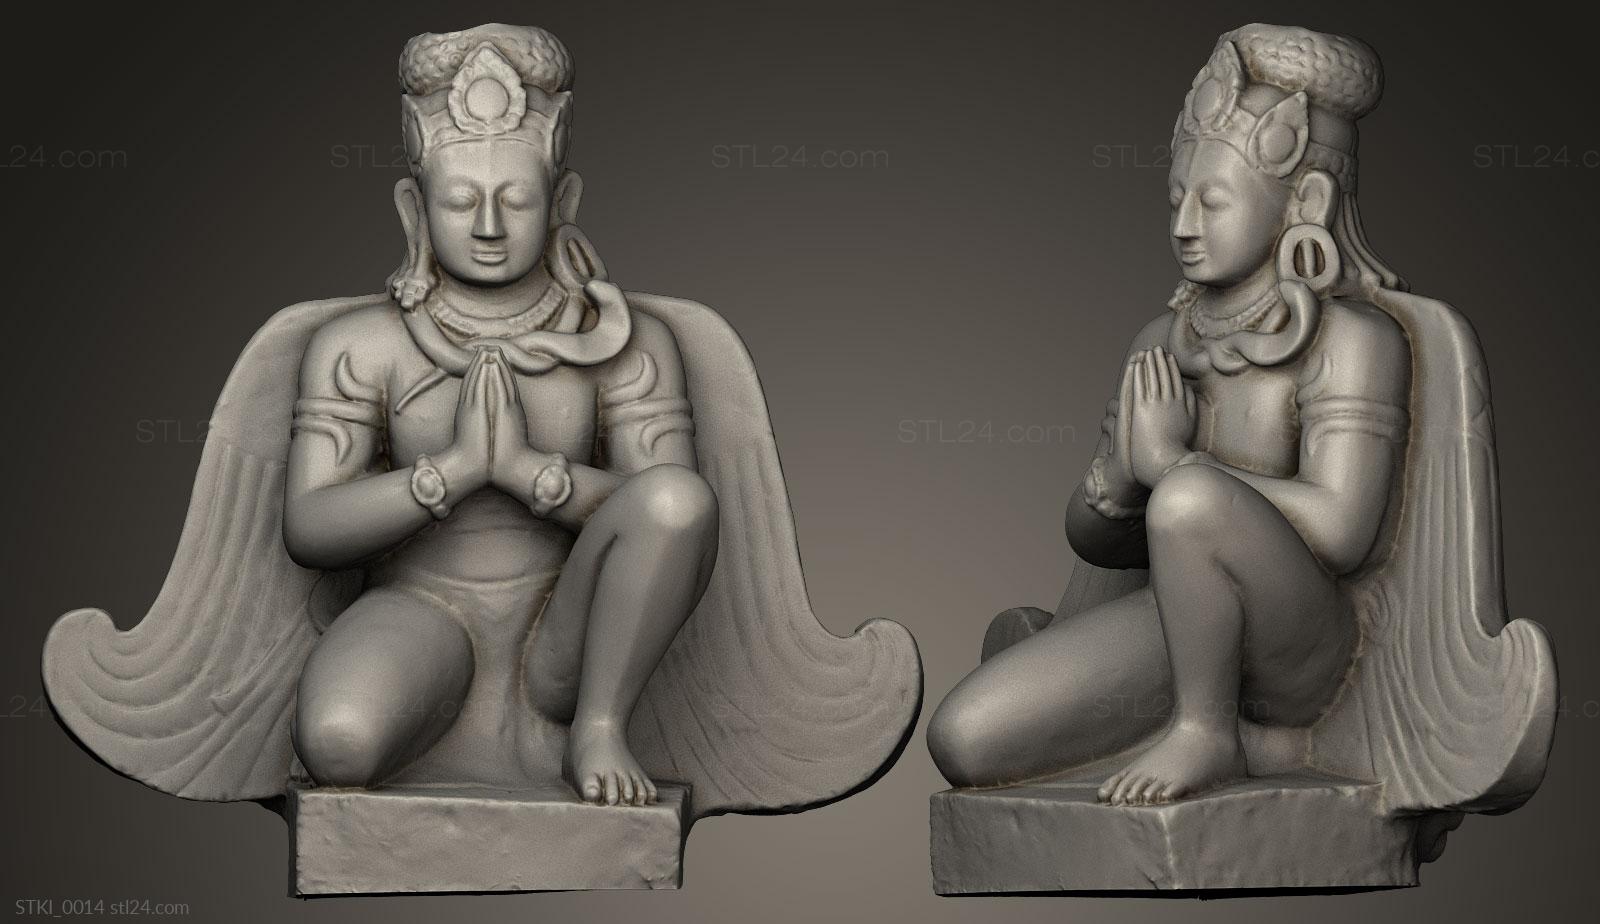 Indian sculptures